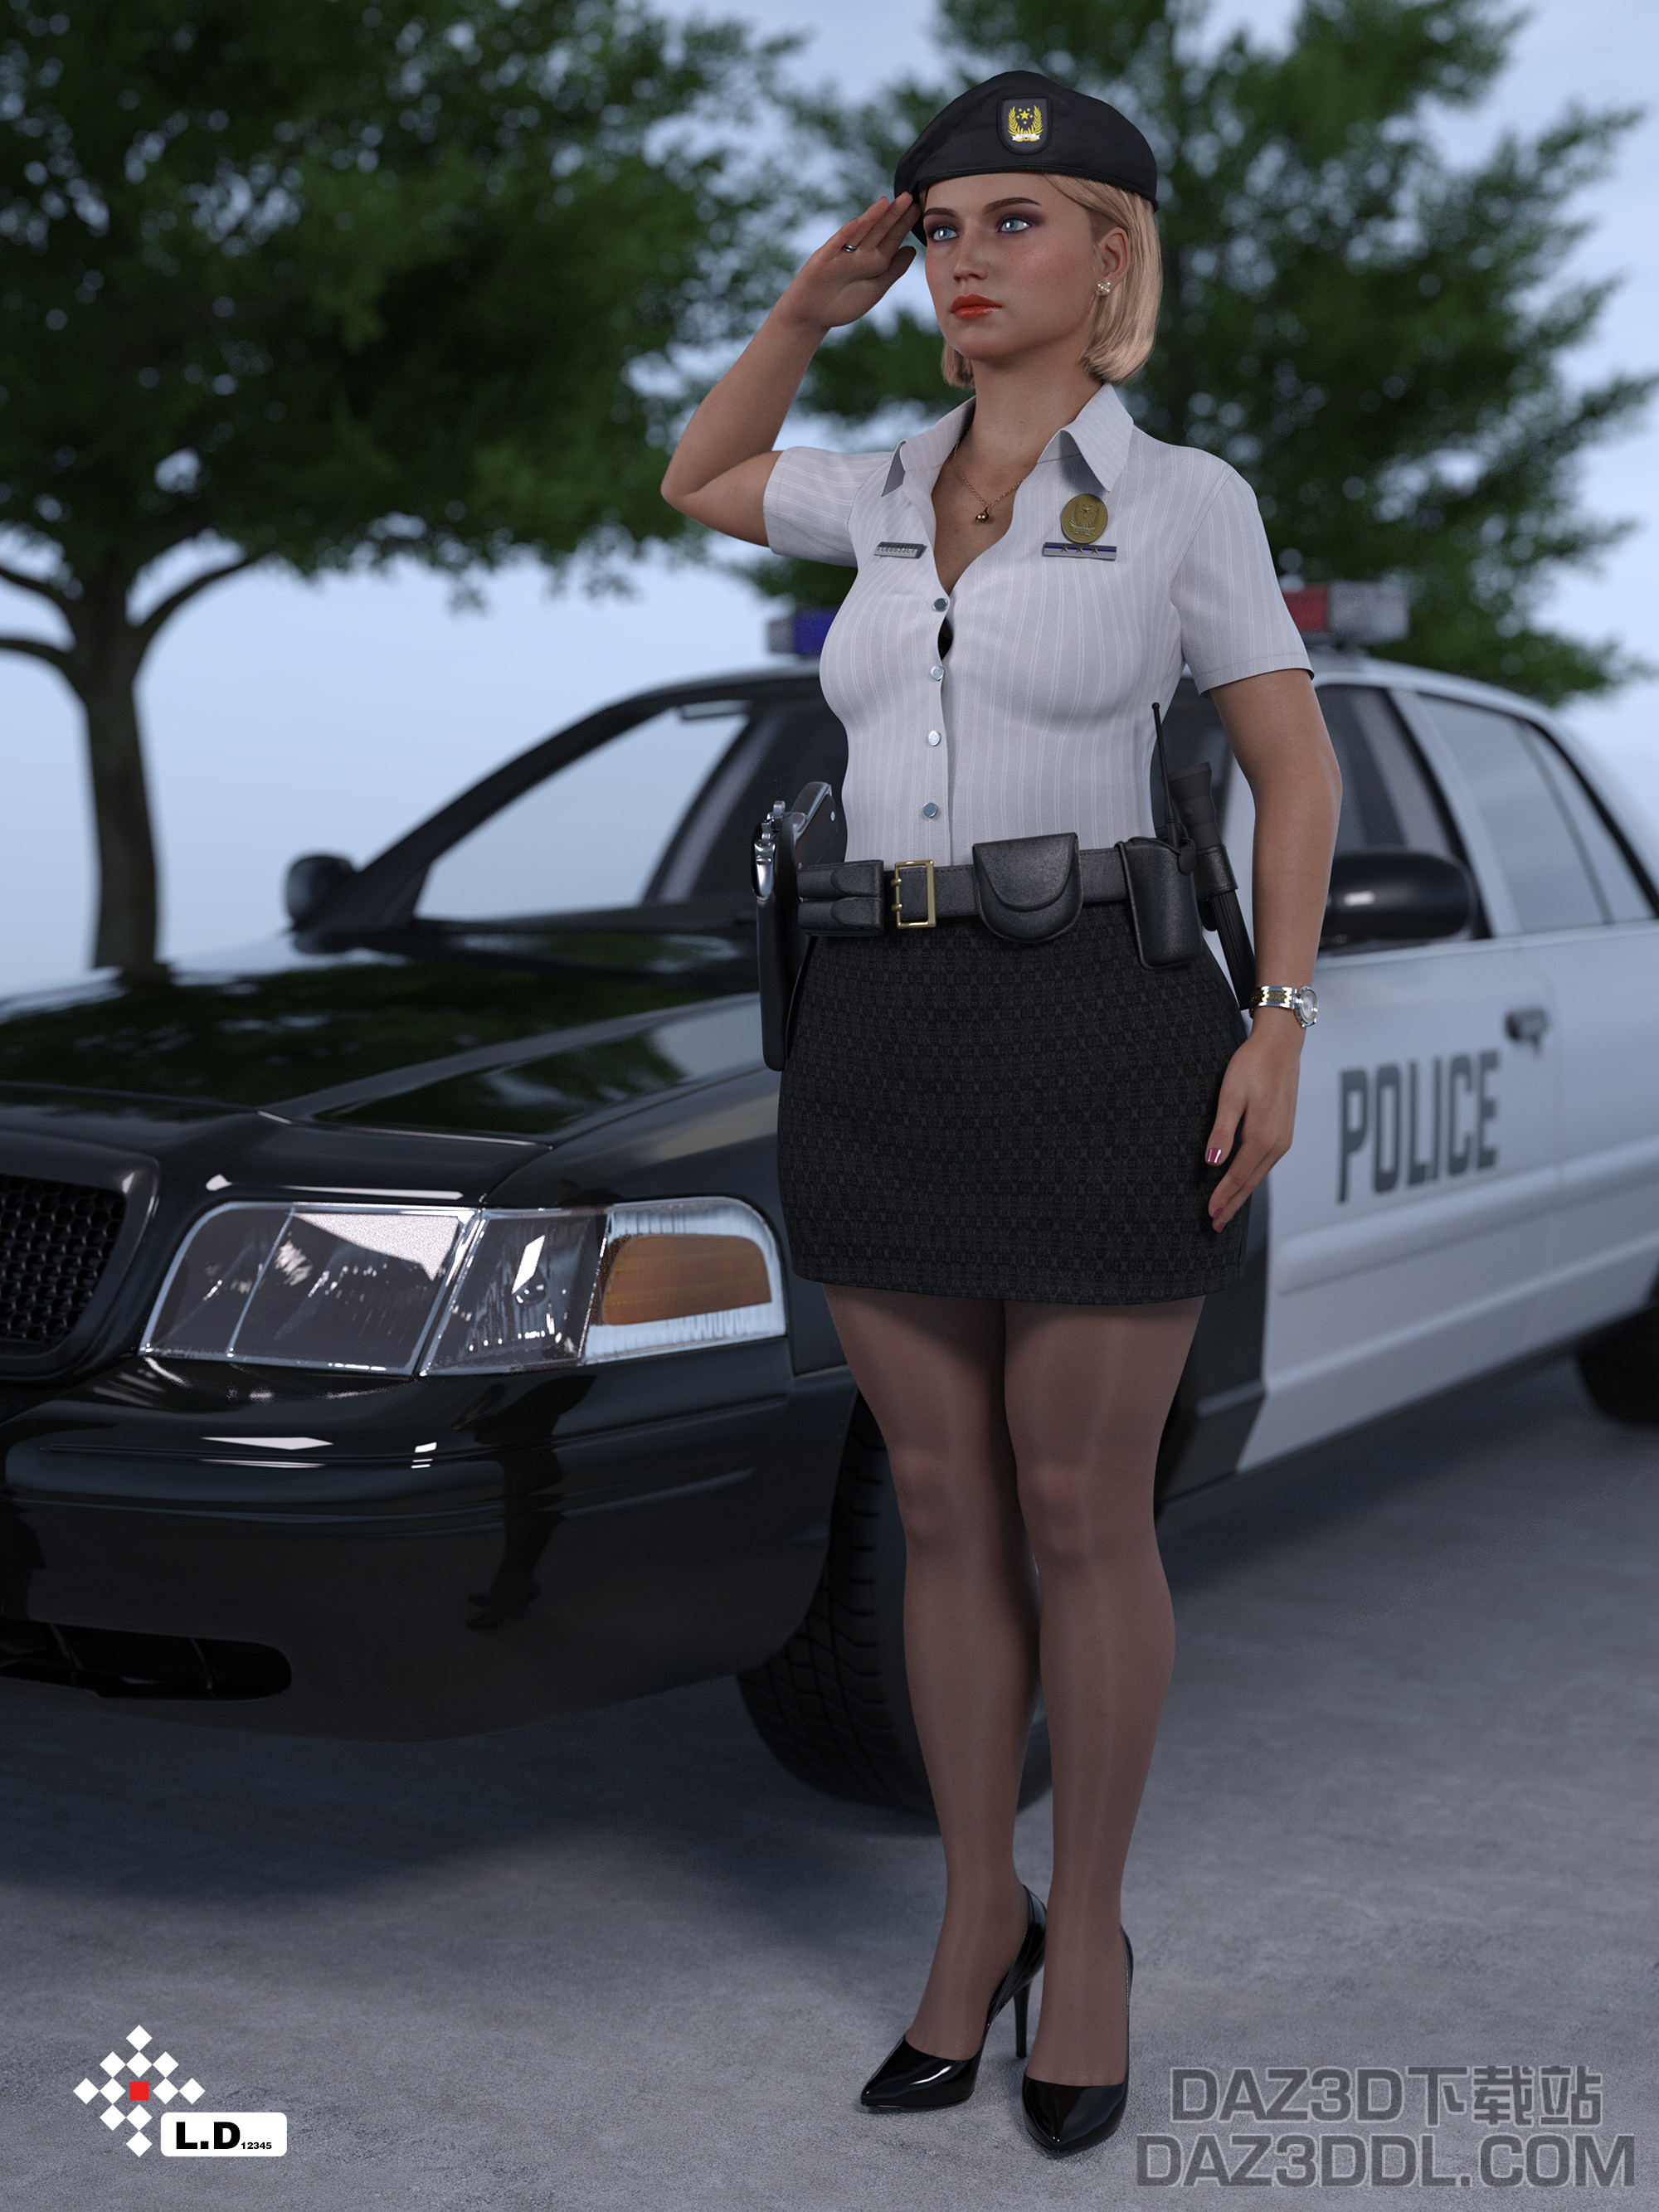 Scene_Policewoman_003_1m.jpg